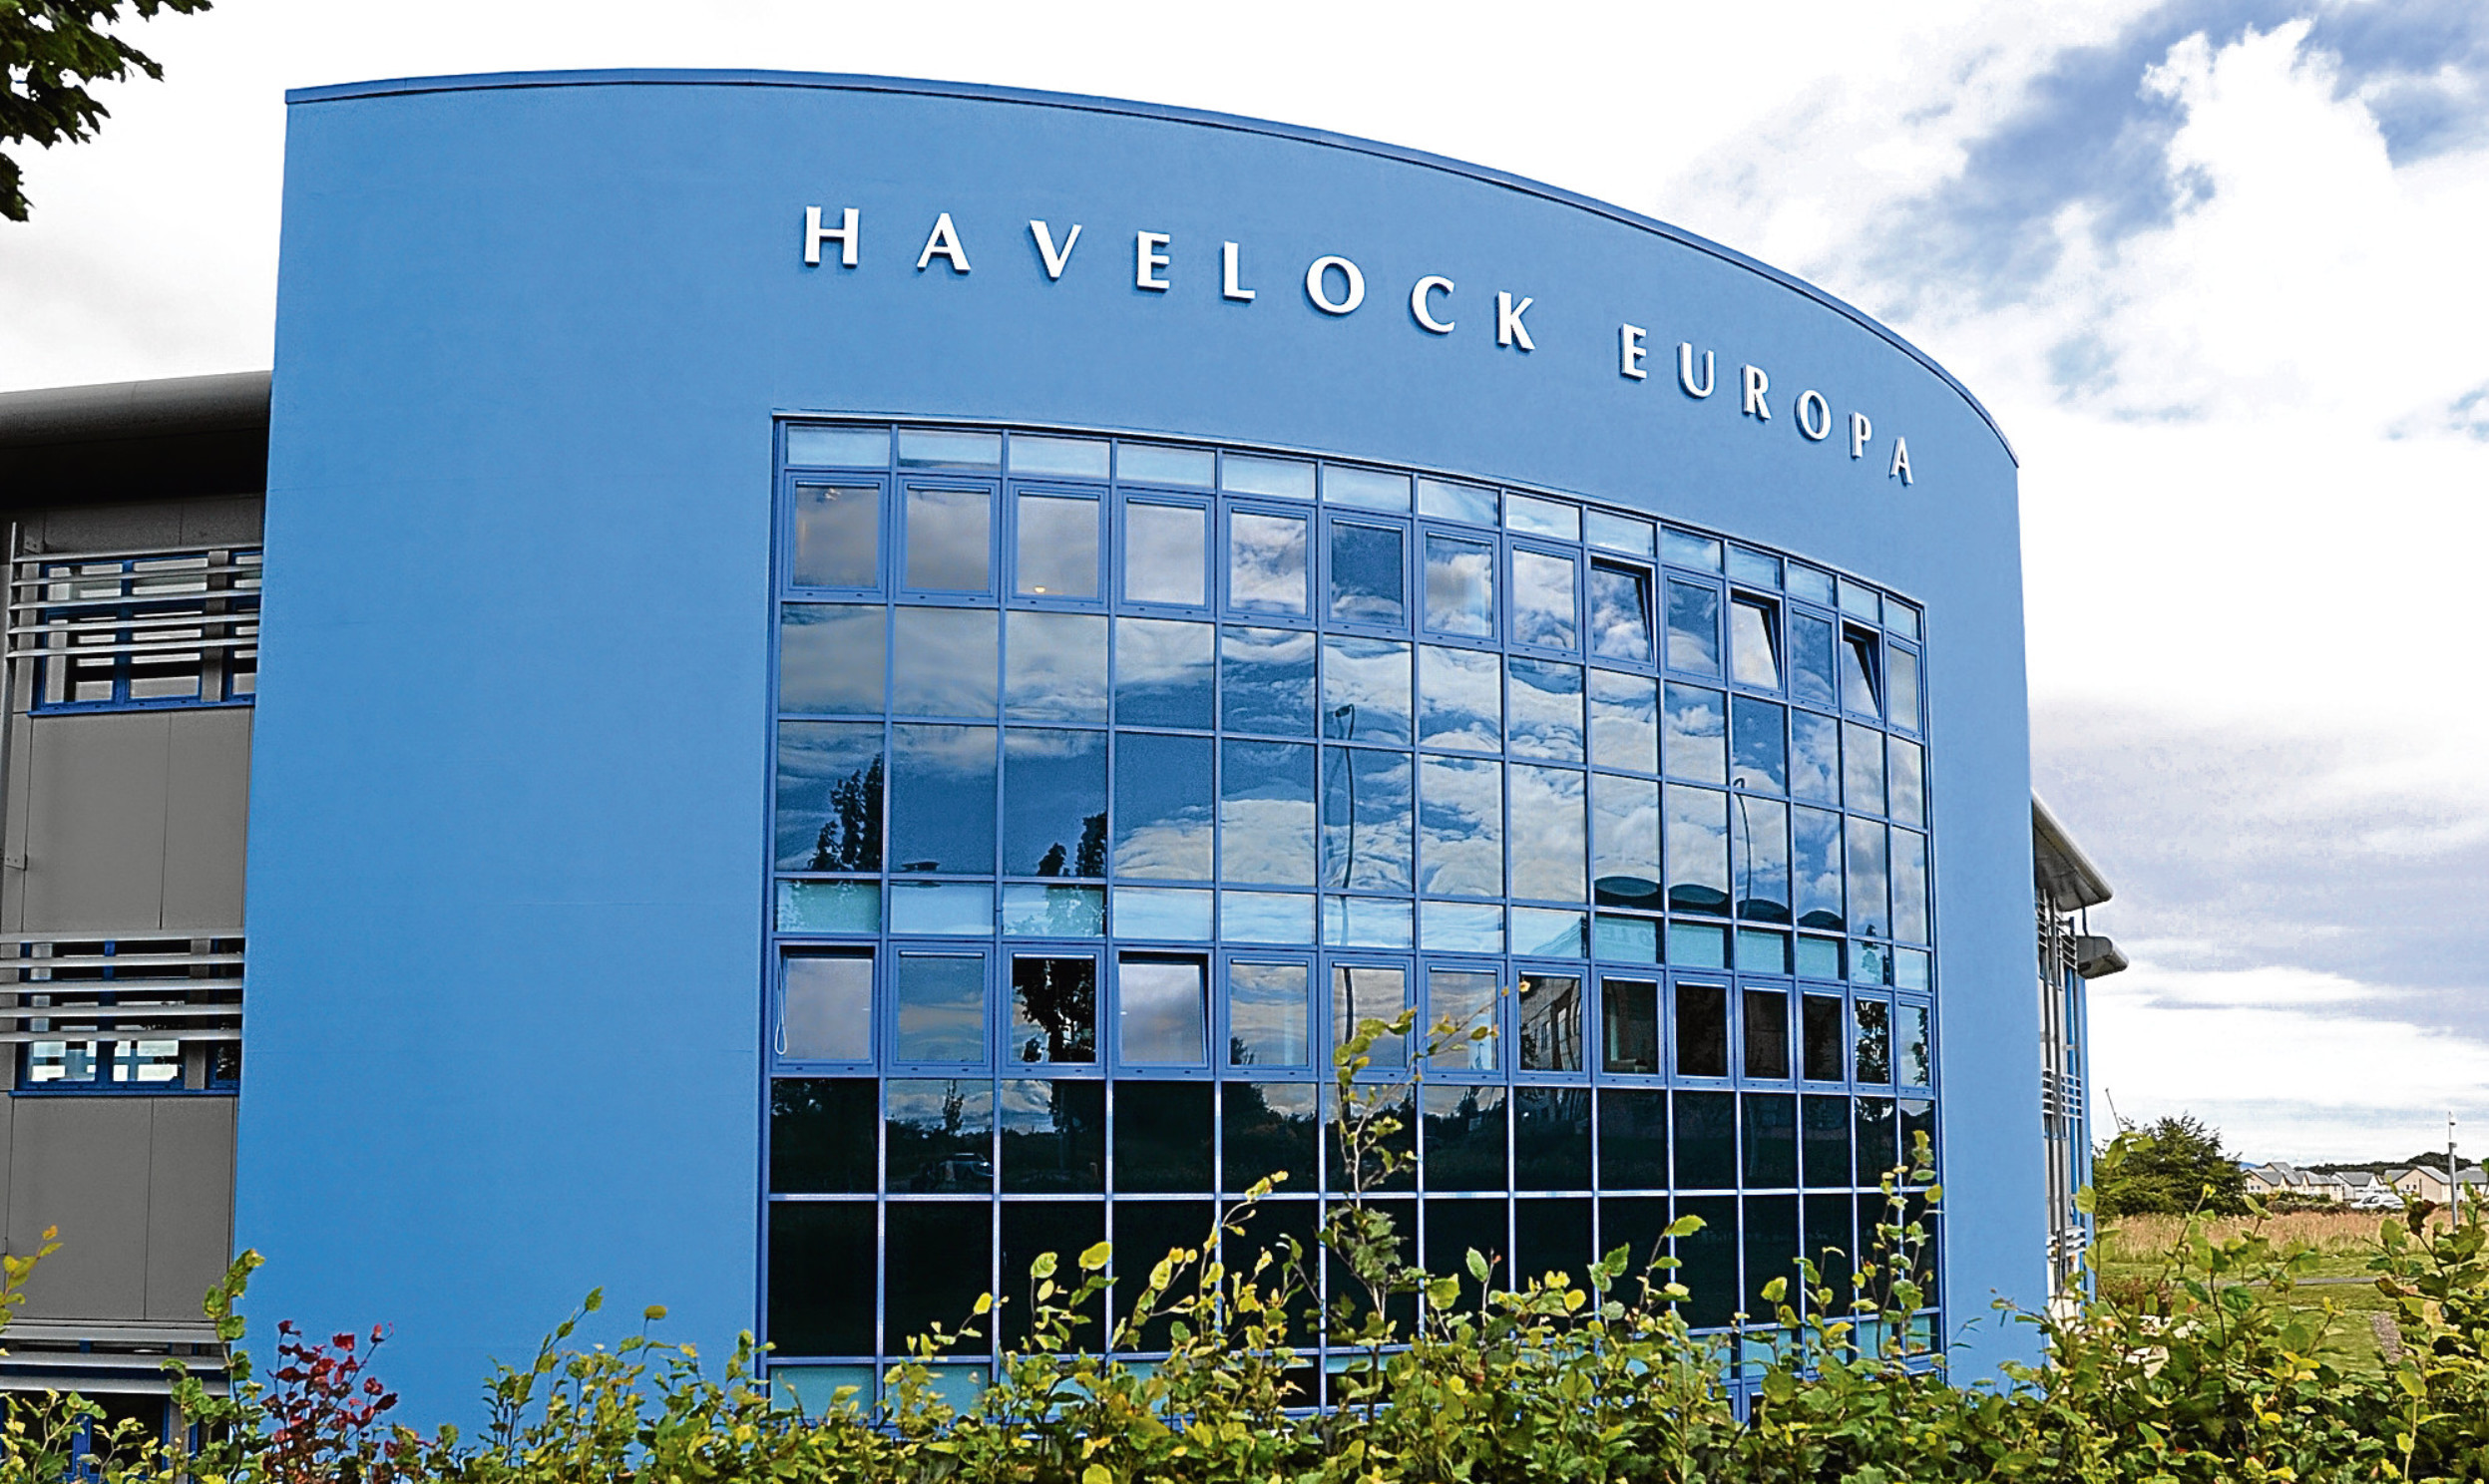 The Havelock Europa premises in the John Smith Business Park, Kirkcaldy